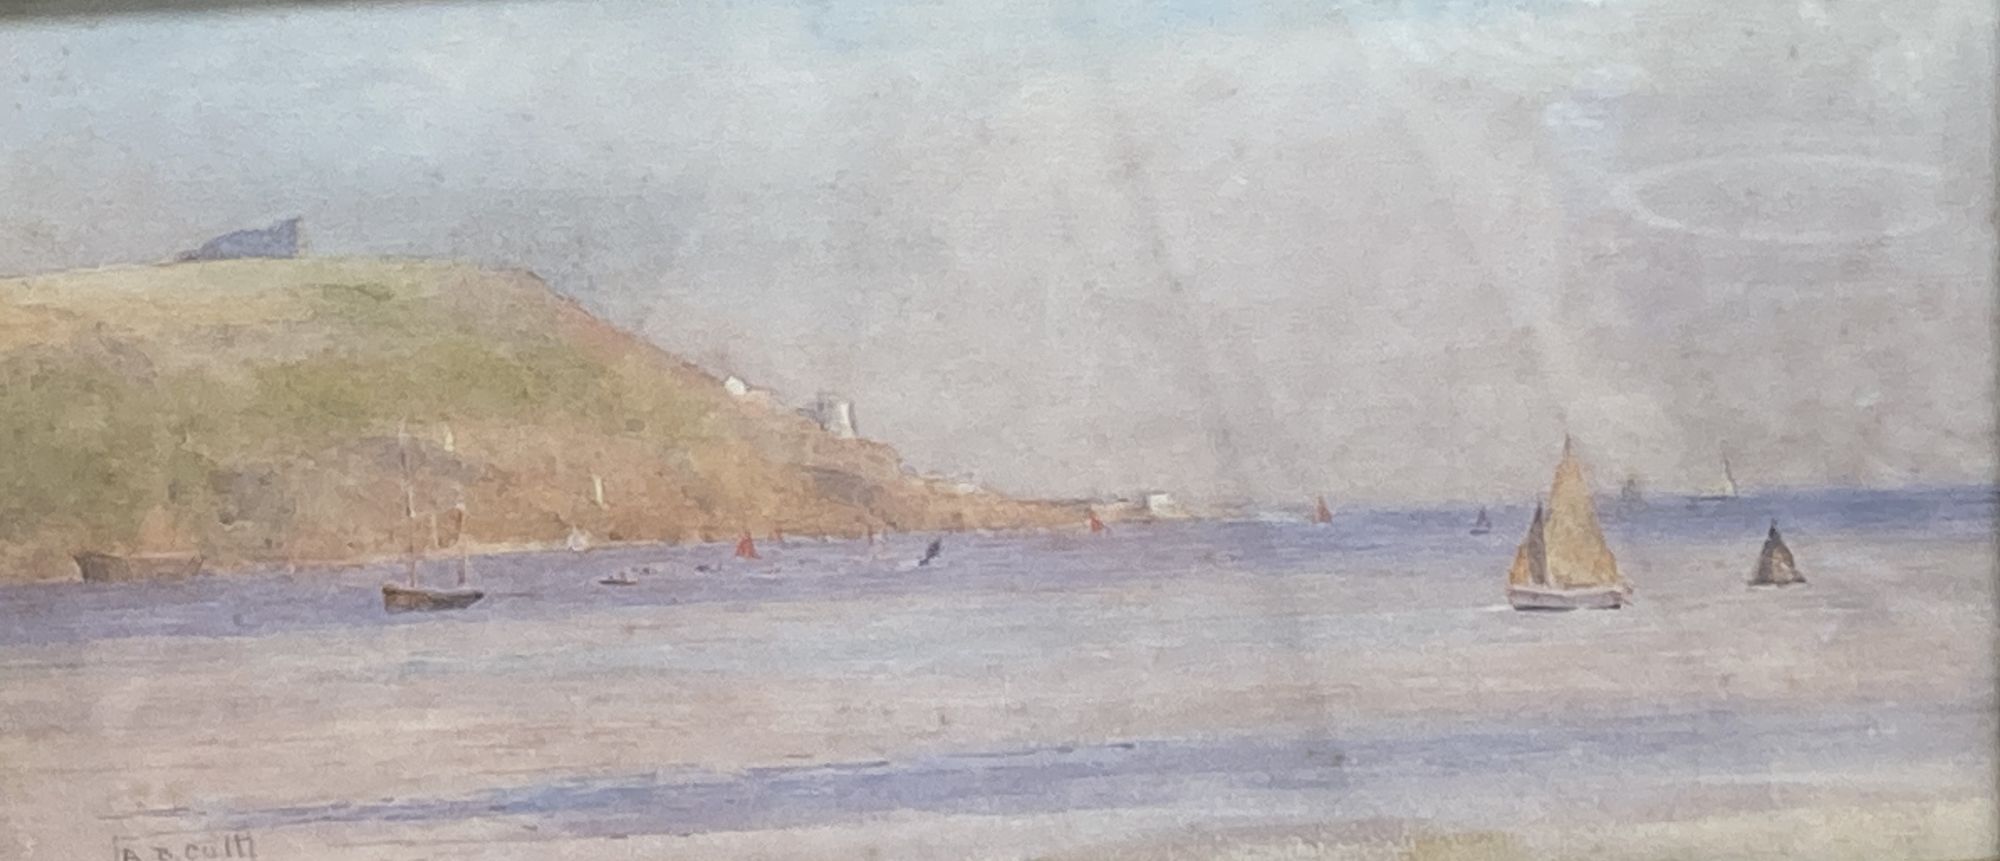 Alma Burton Cull (1880-1931), watercolour, Shipping along the coast, signed in pencil, 14 x 29cm